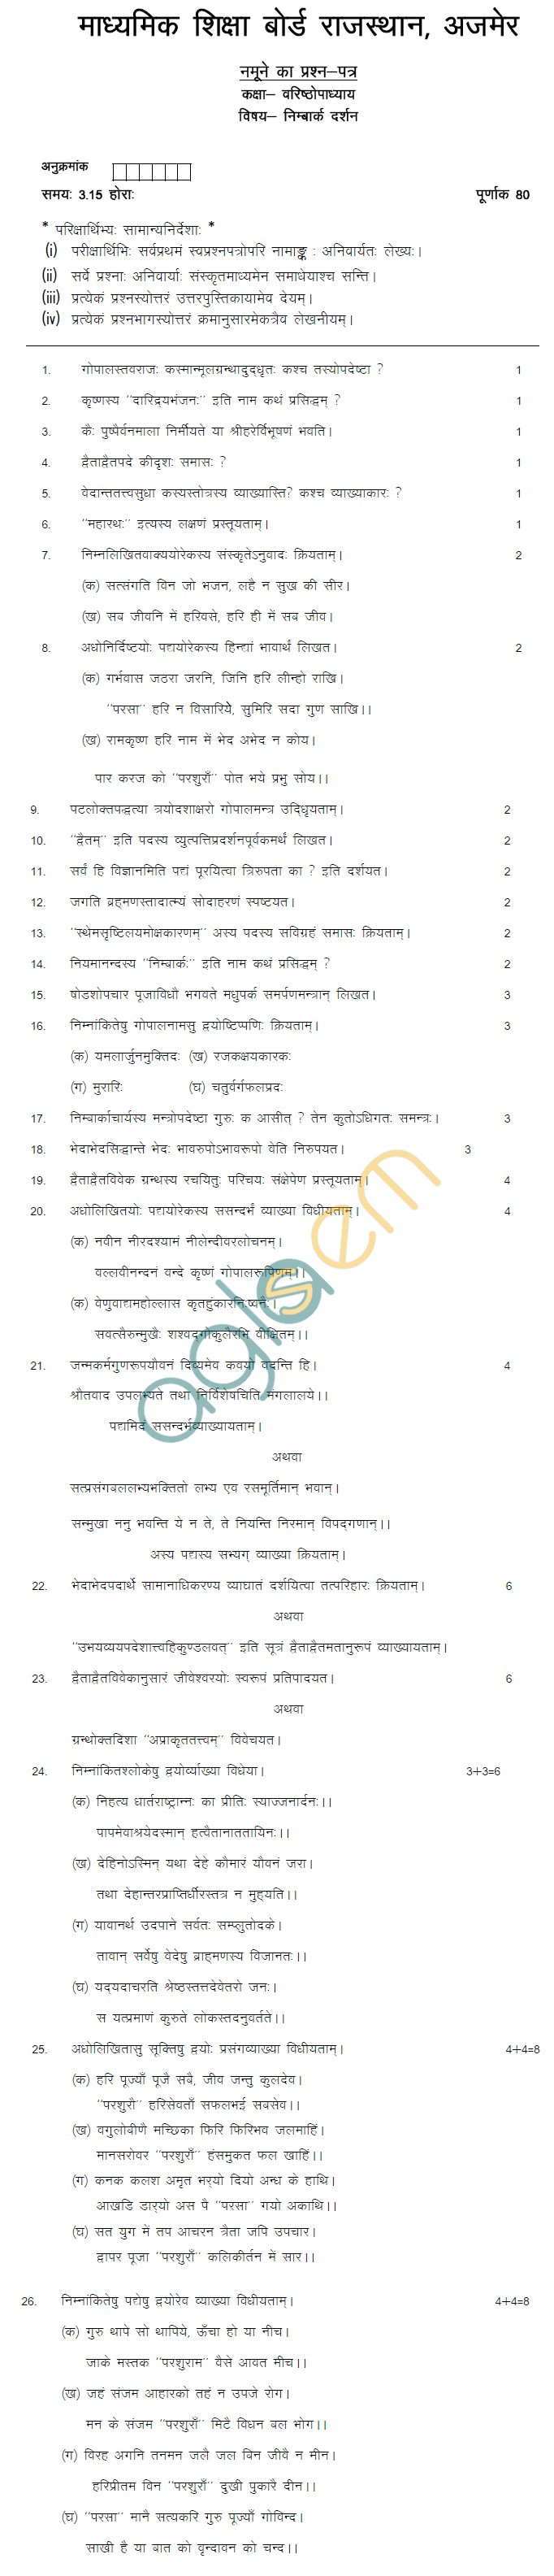 Rajasthan Board Class 12 Nimbark Darshan Model Question Paper